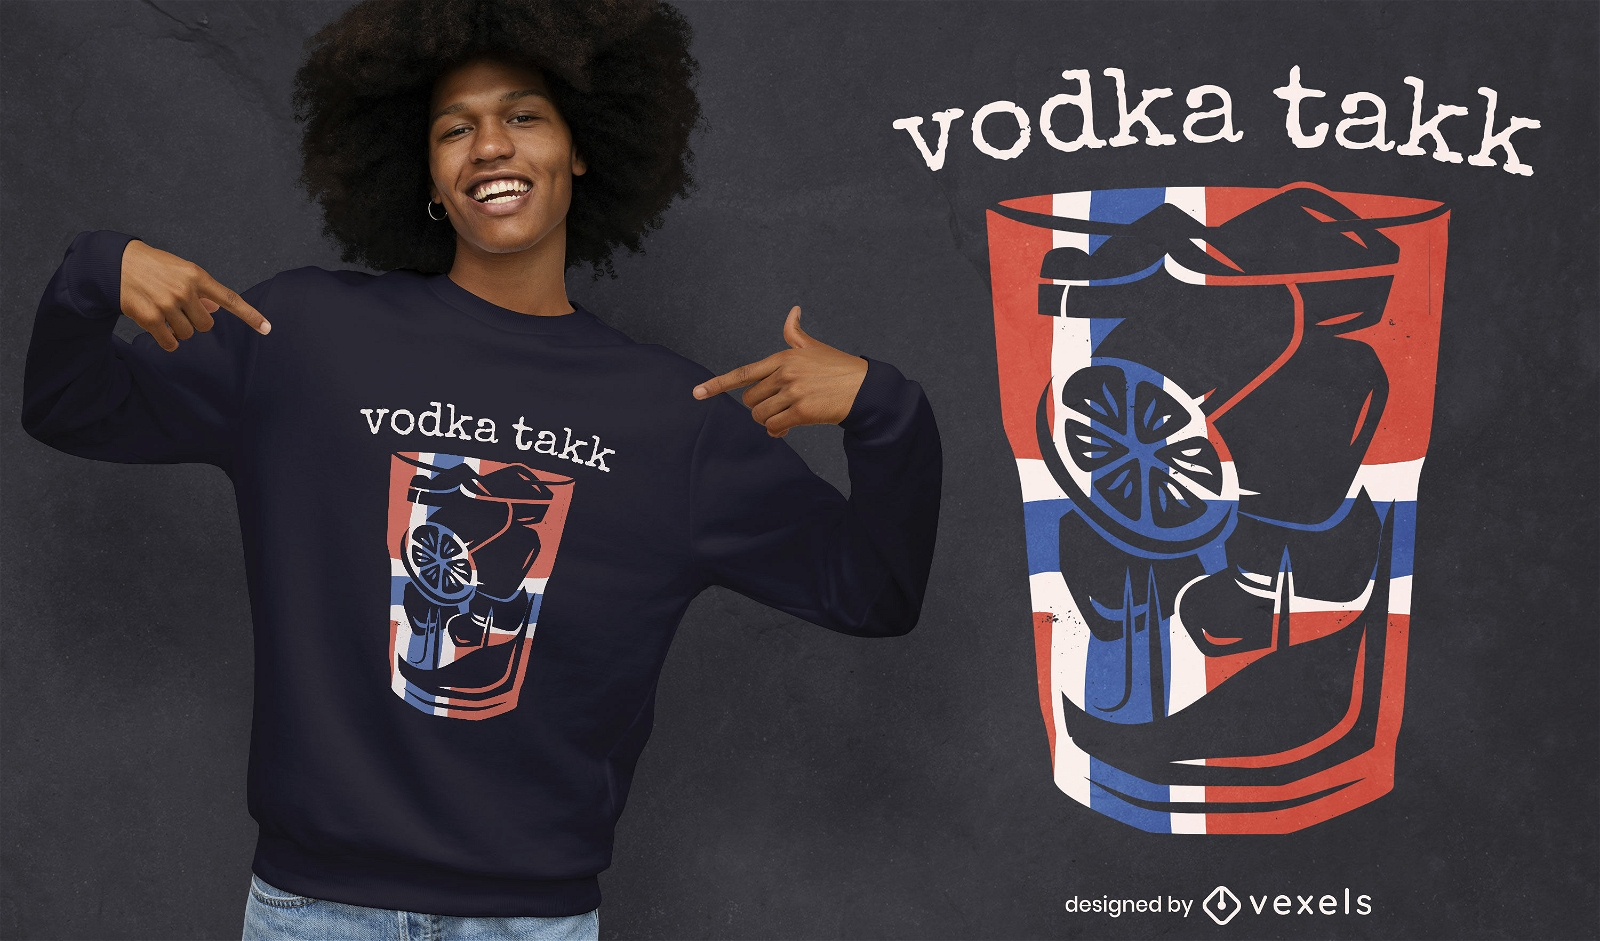 Dise?o de camiseta de bebida alcoh?lica de vodka.